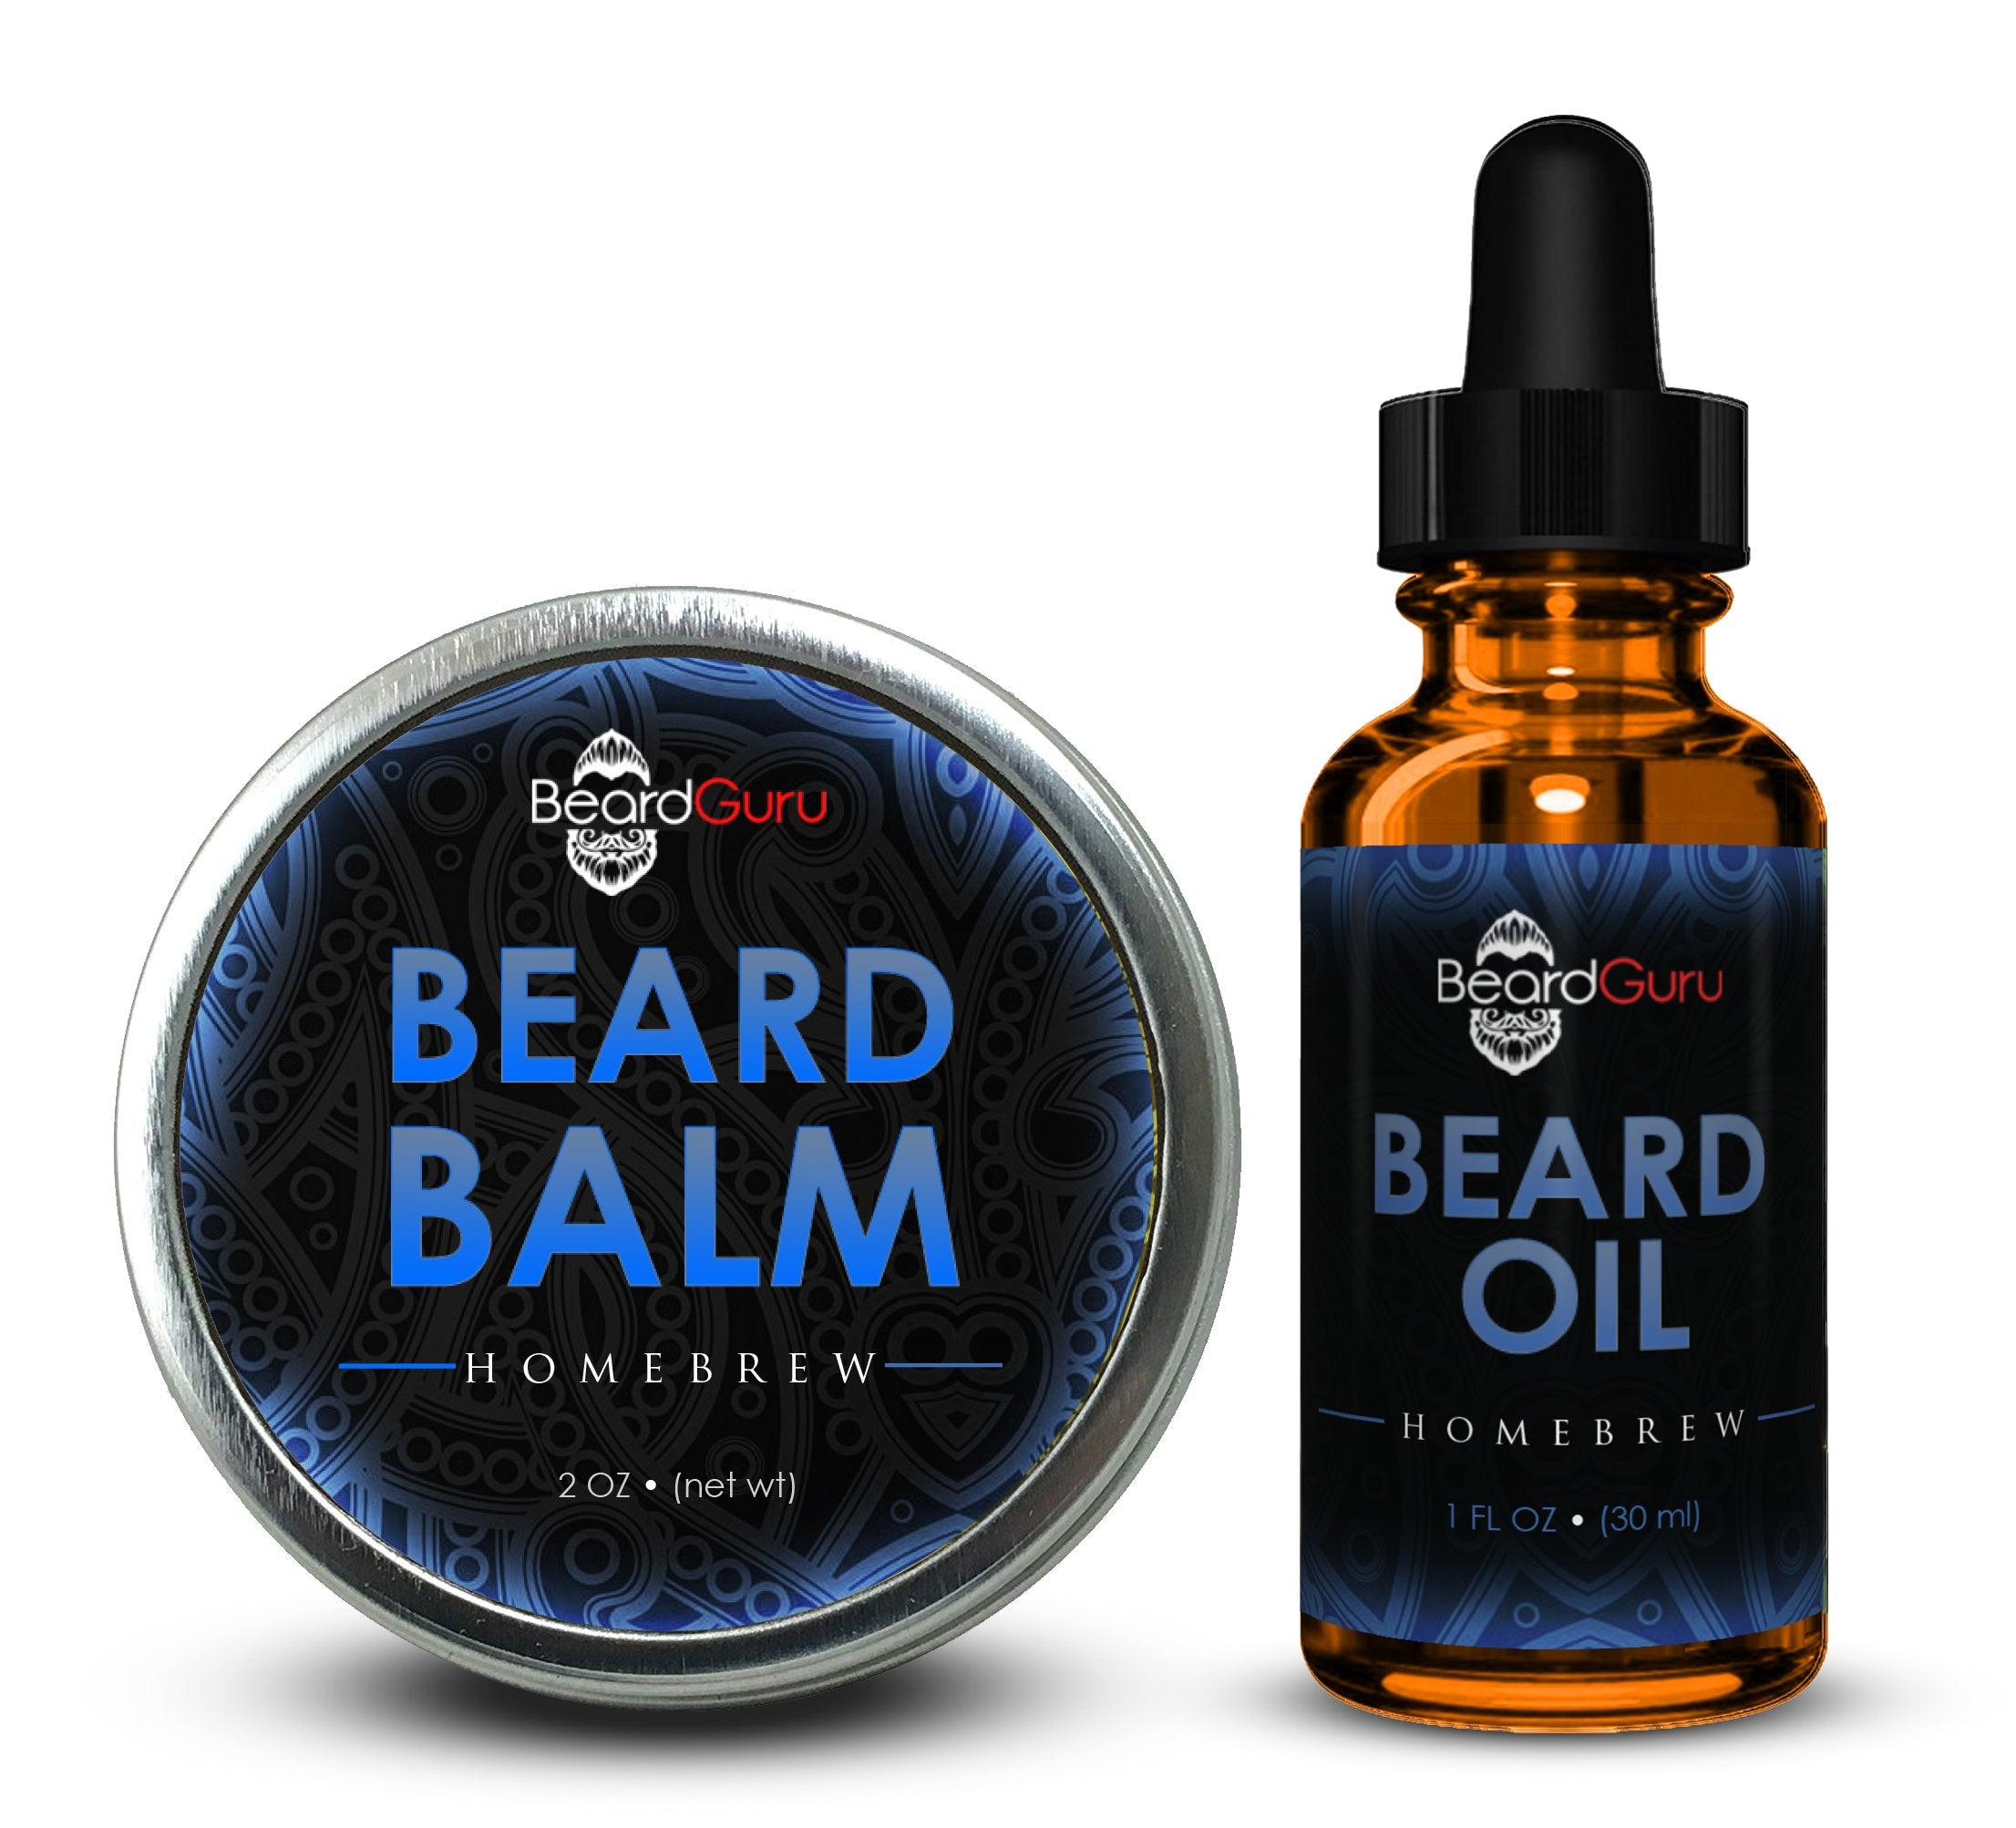 Home Brew Beard Oil - feelgreat.co